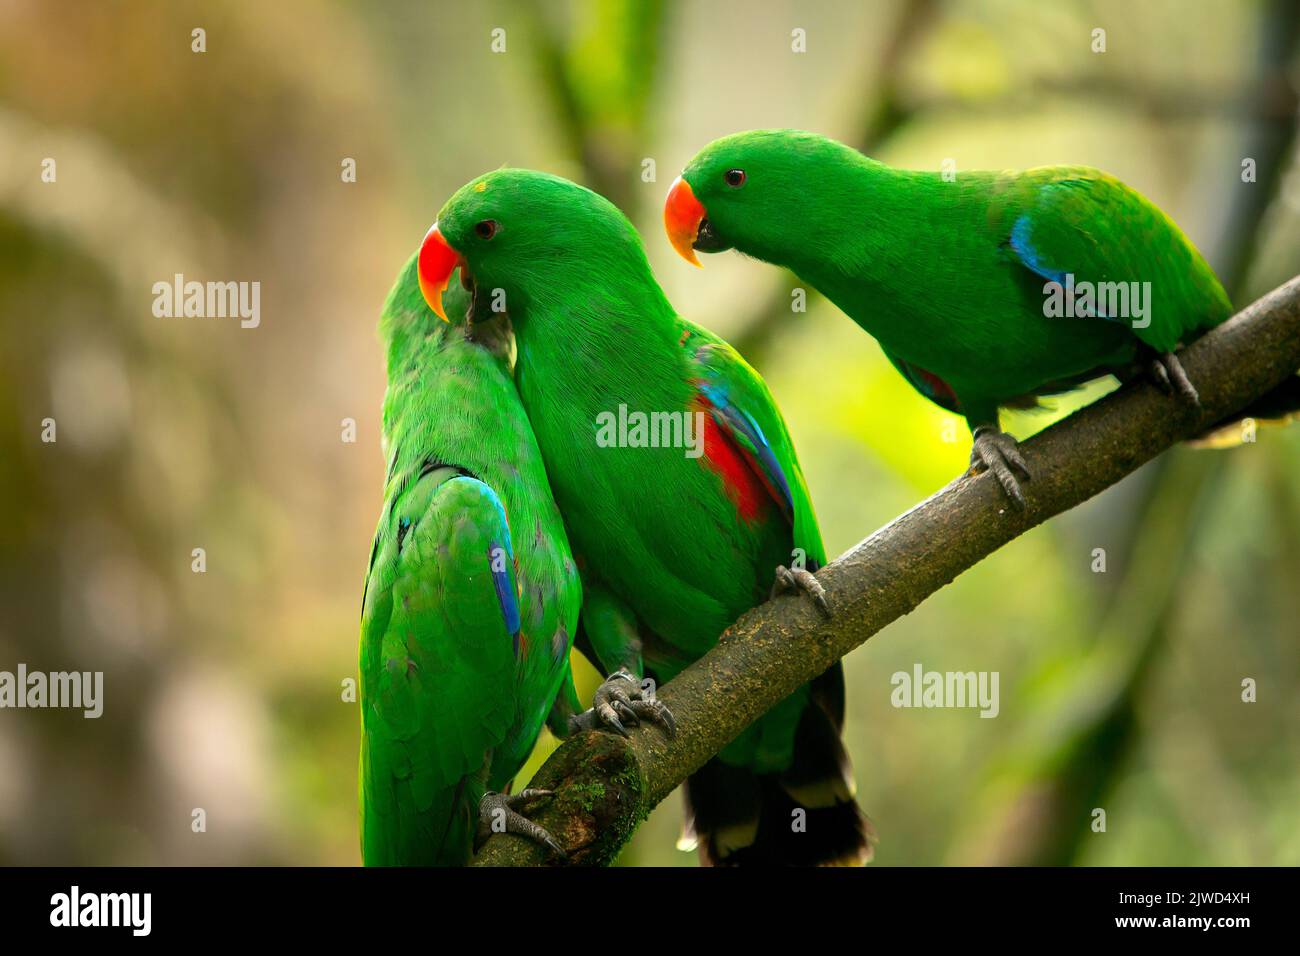 perroquets verts. Beau couple de perroquets verts. Perroquet vert faune de la nature tropicale Banque D'Images